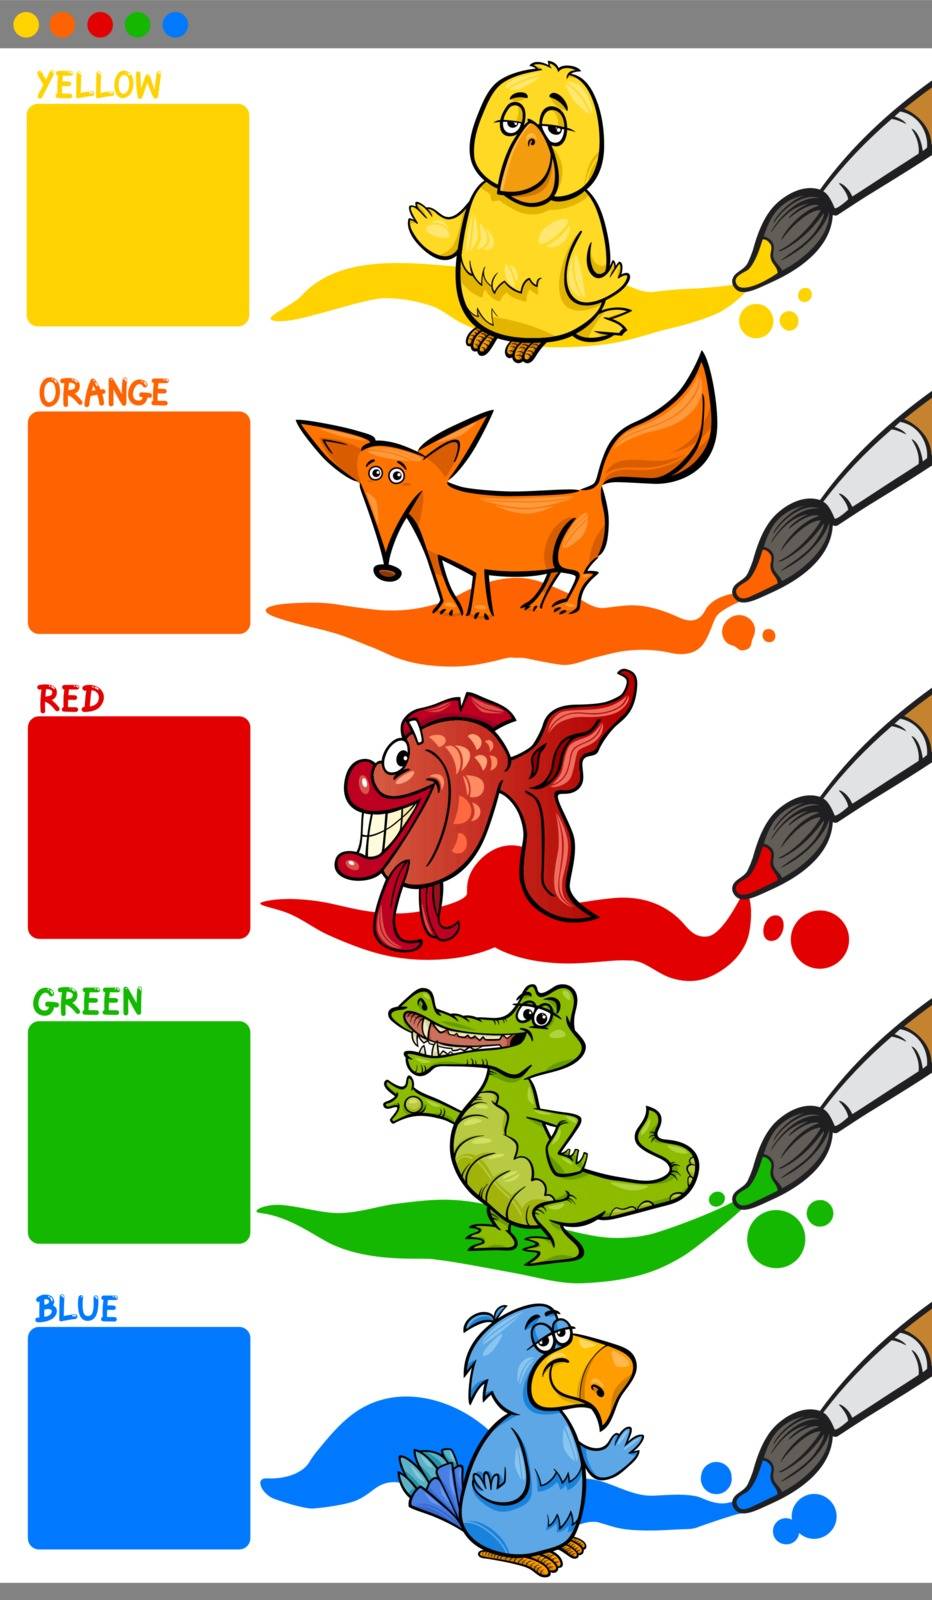 primary colors with animals by izakowski